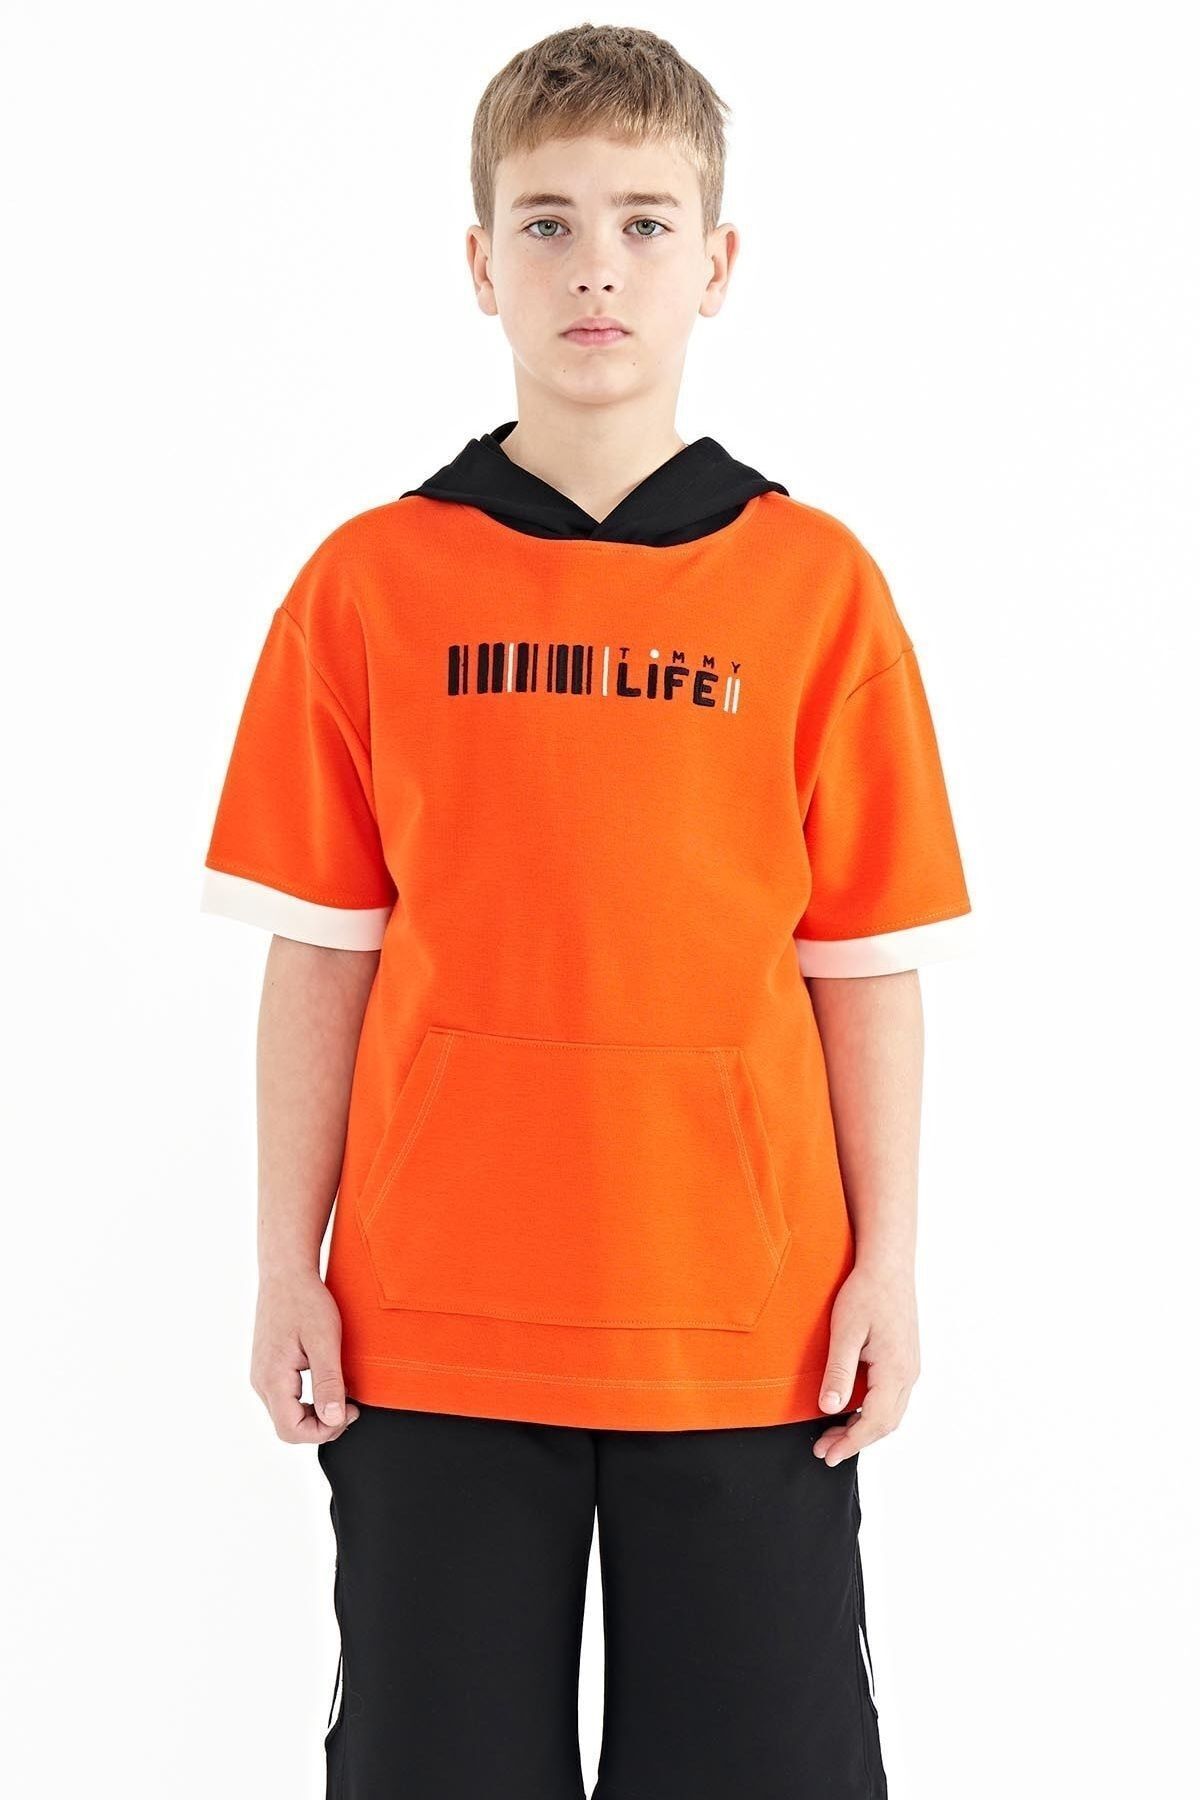 TOMMY LIFE Portakal Renk Bloklu Kapüşonlu Kanguru Cepli Oversize Erkek Çocuk T-shirt - 11148